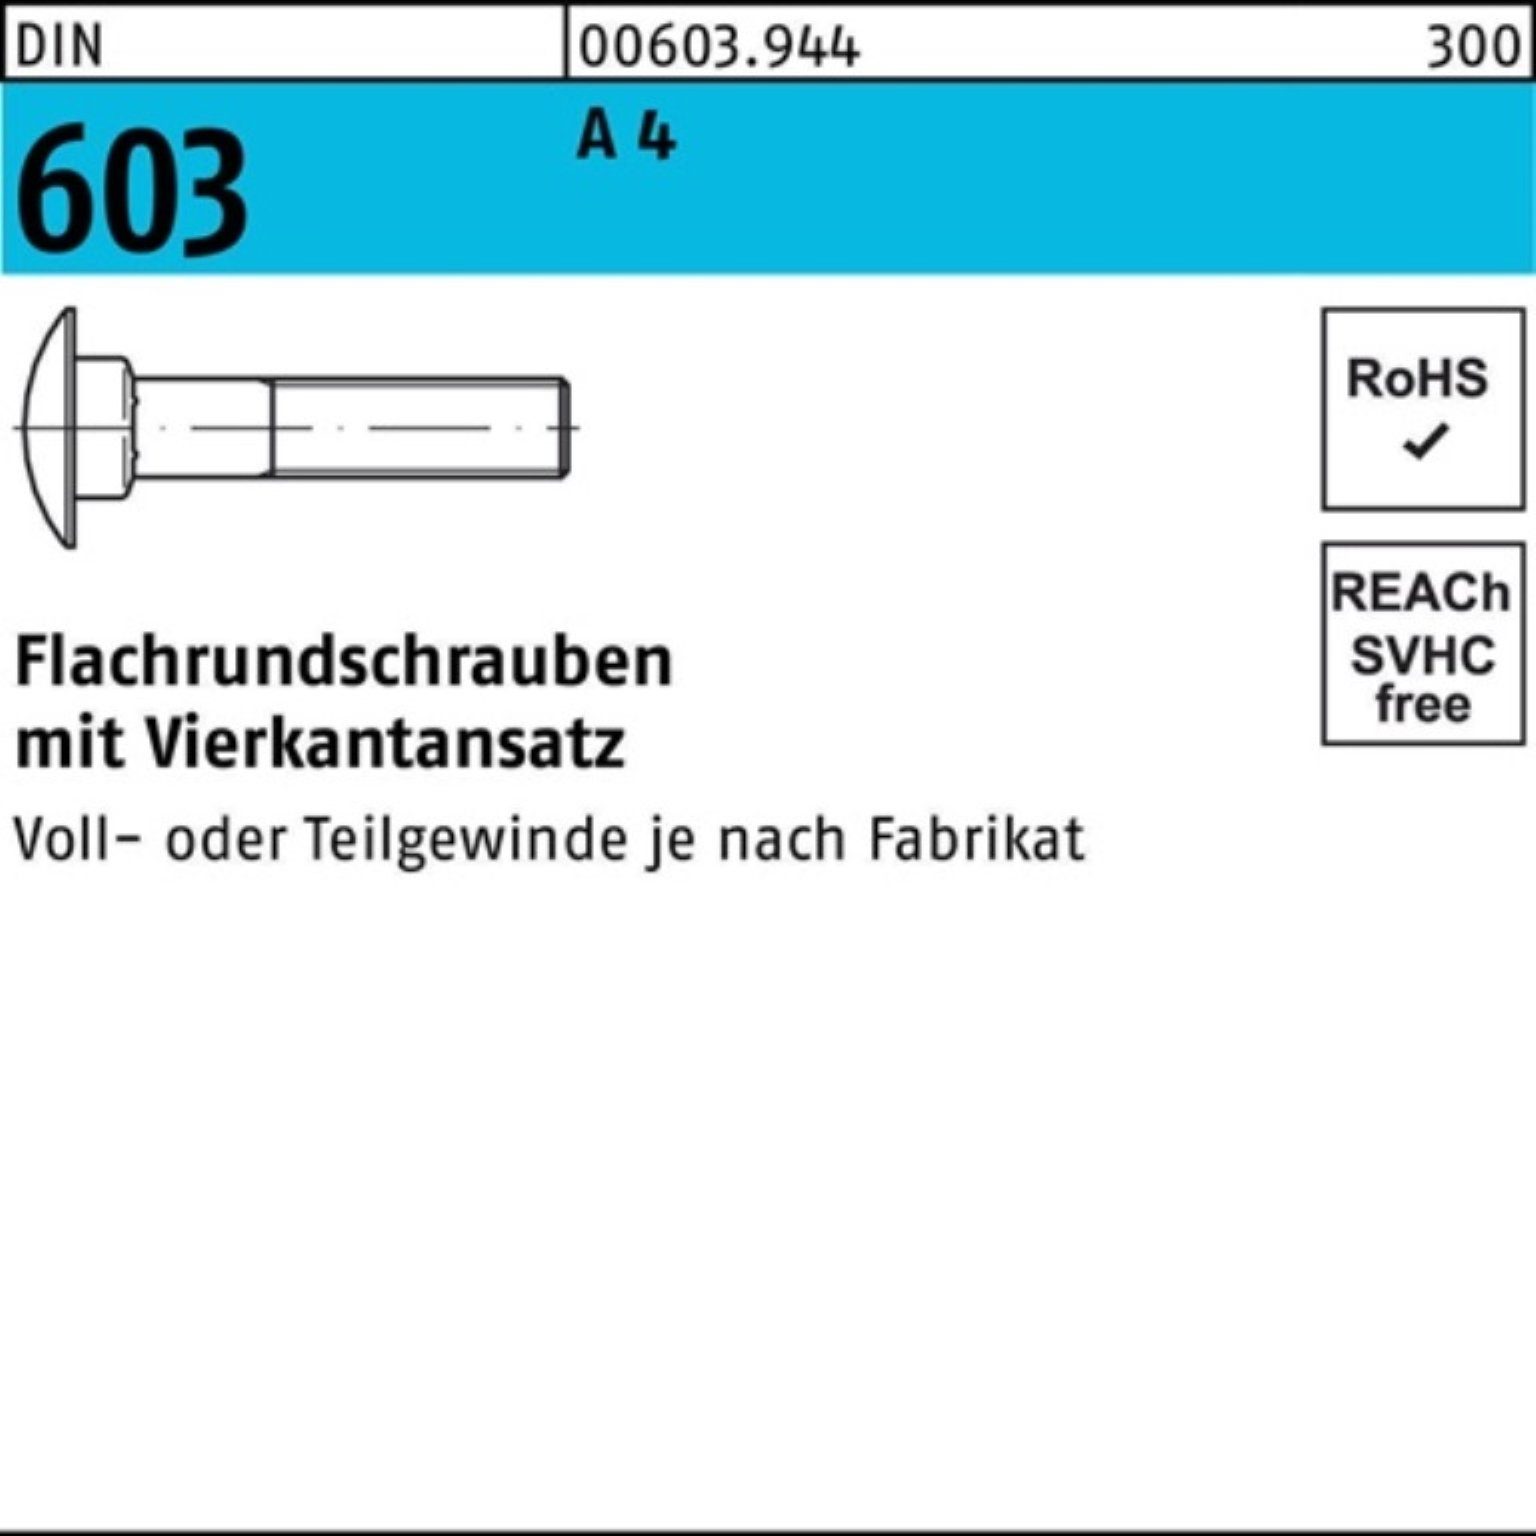 Reyher Schraube 100er St M6x 603 4 A Flachrundschraube 10 Pack DIN Vierkantansatz 100